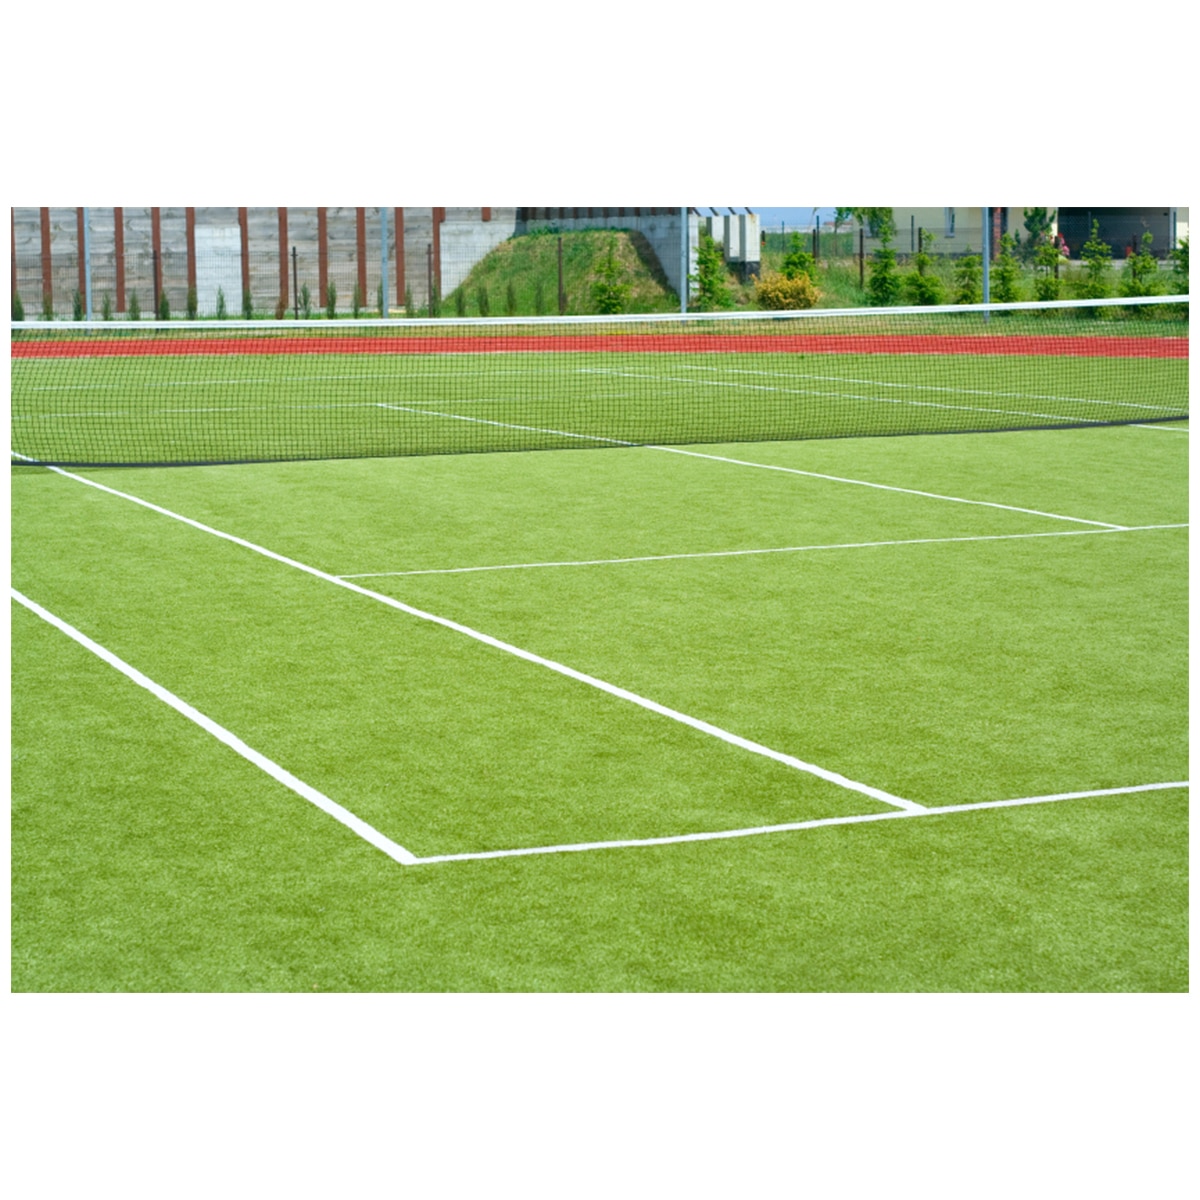 Urban Pro Tennis Court 34m x 16m artifical turf - Green